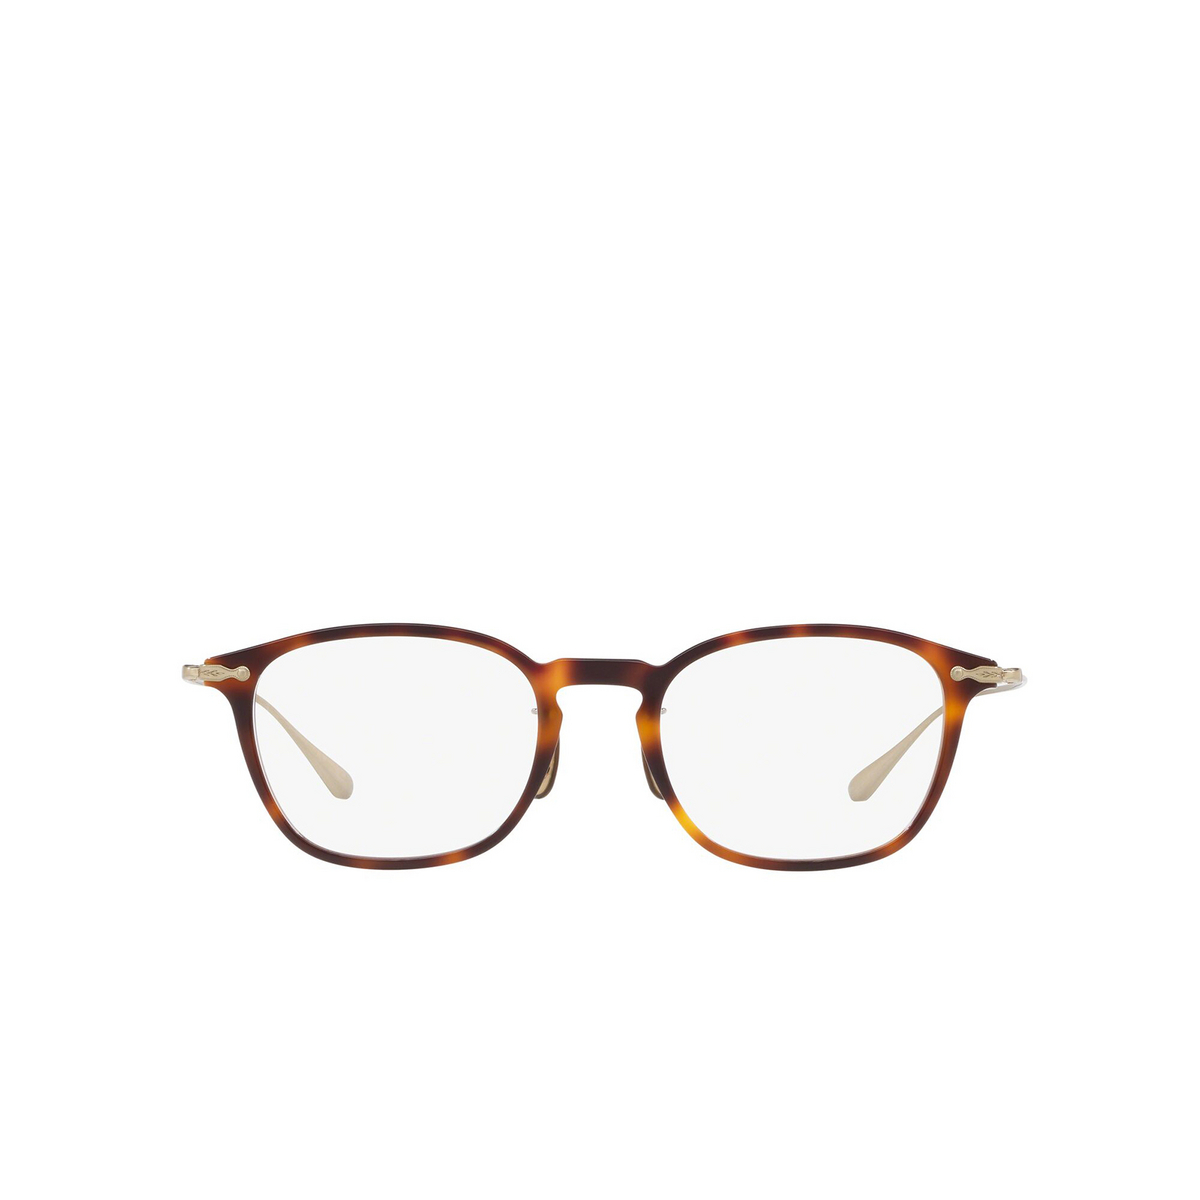 Oliver Peoples® Rectangle Eyeglasses: Winnet OV5371D color Dark Mahogany 1007 - front view.